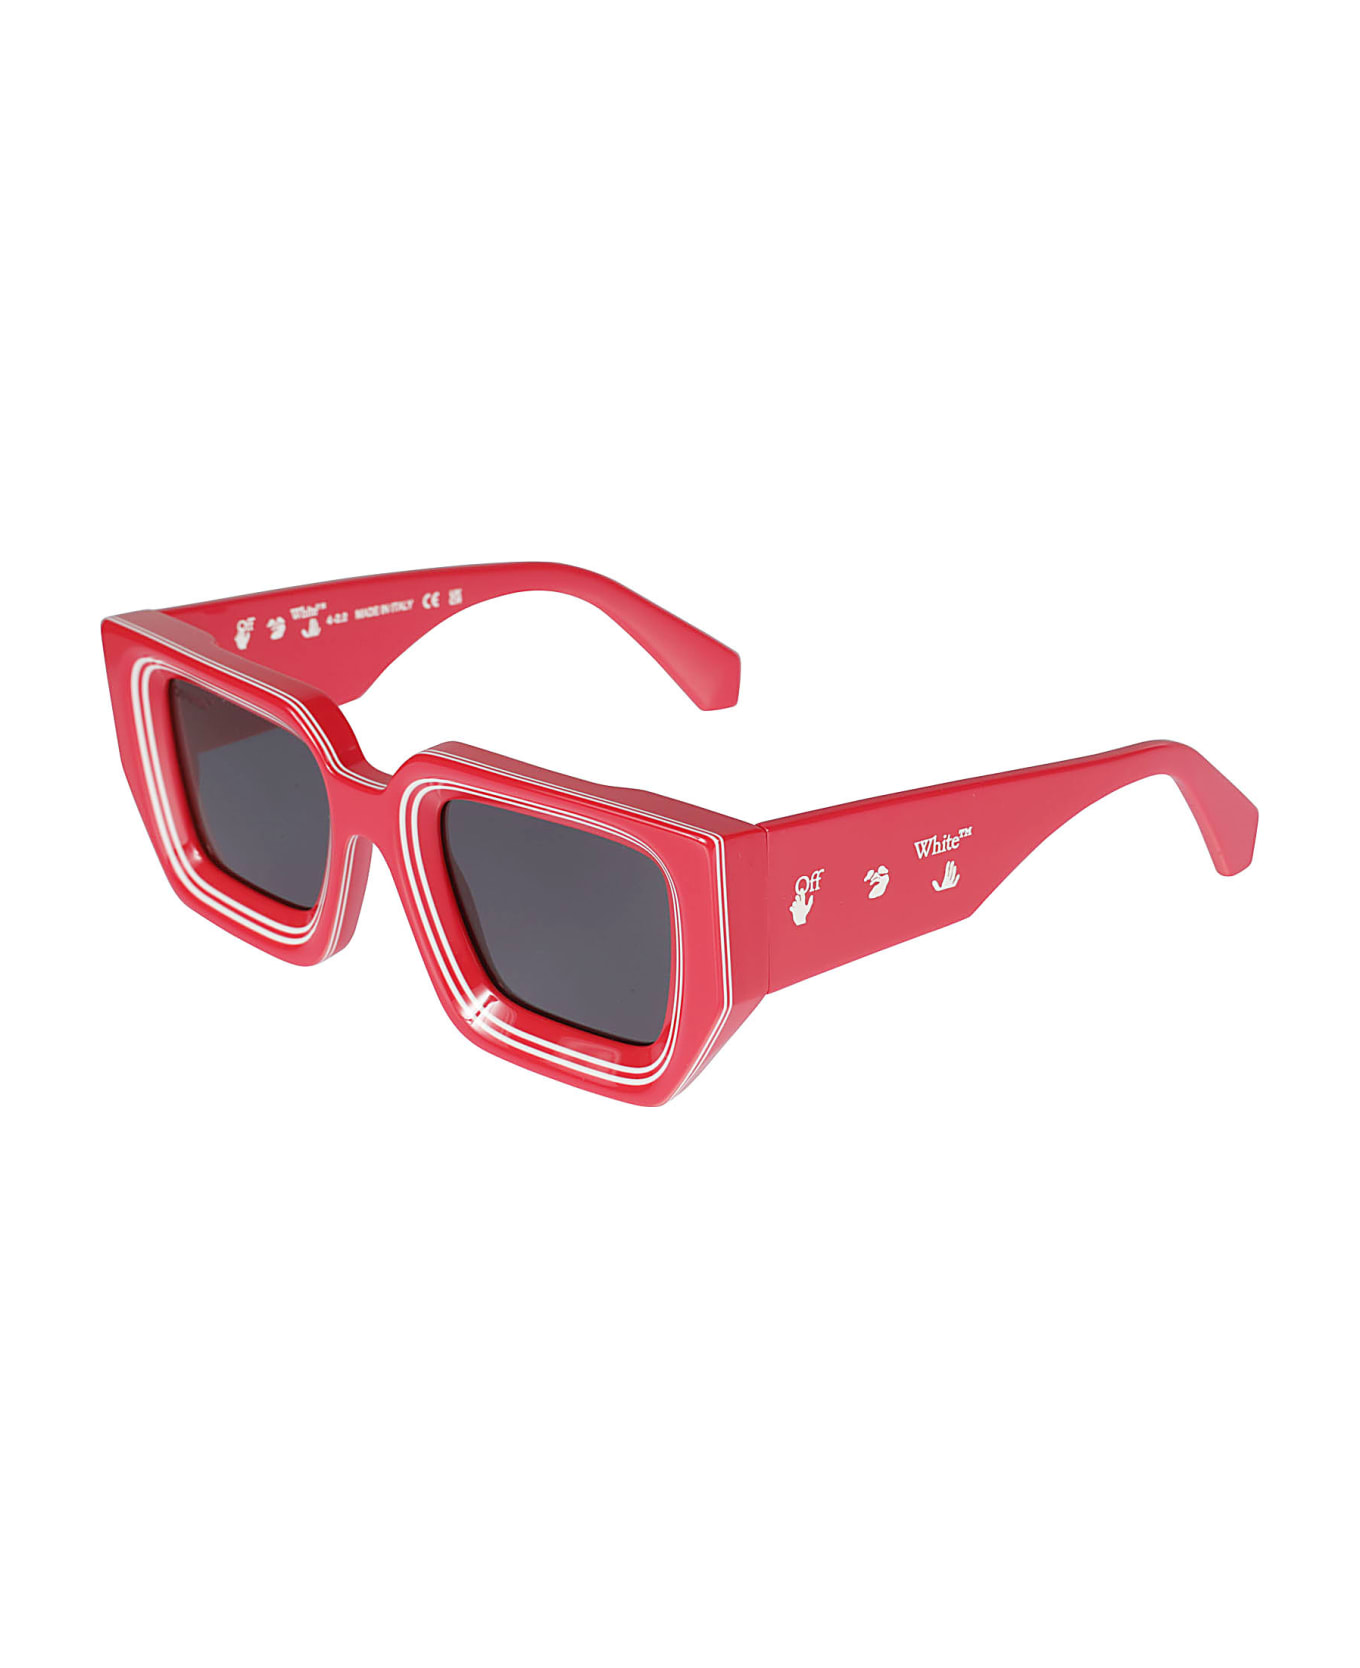 Off-White Francisco Sunglasses - Red